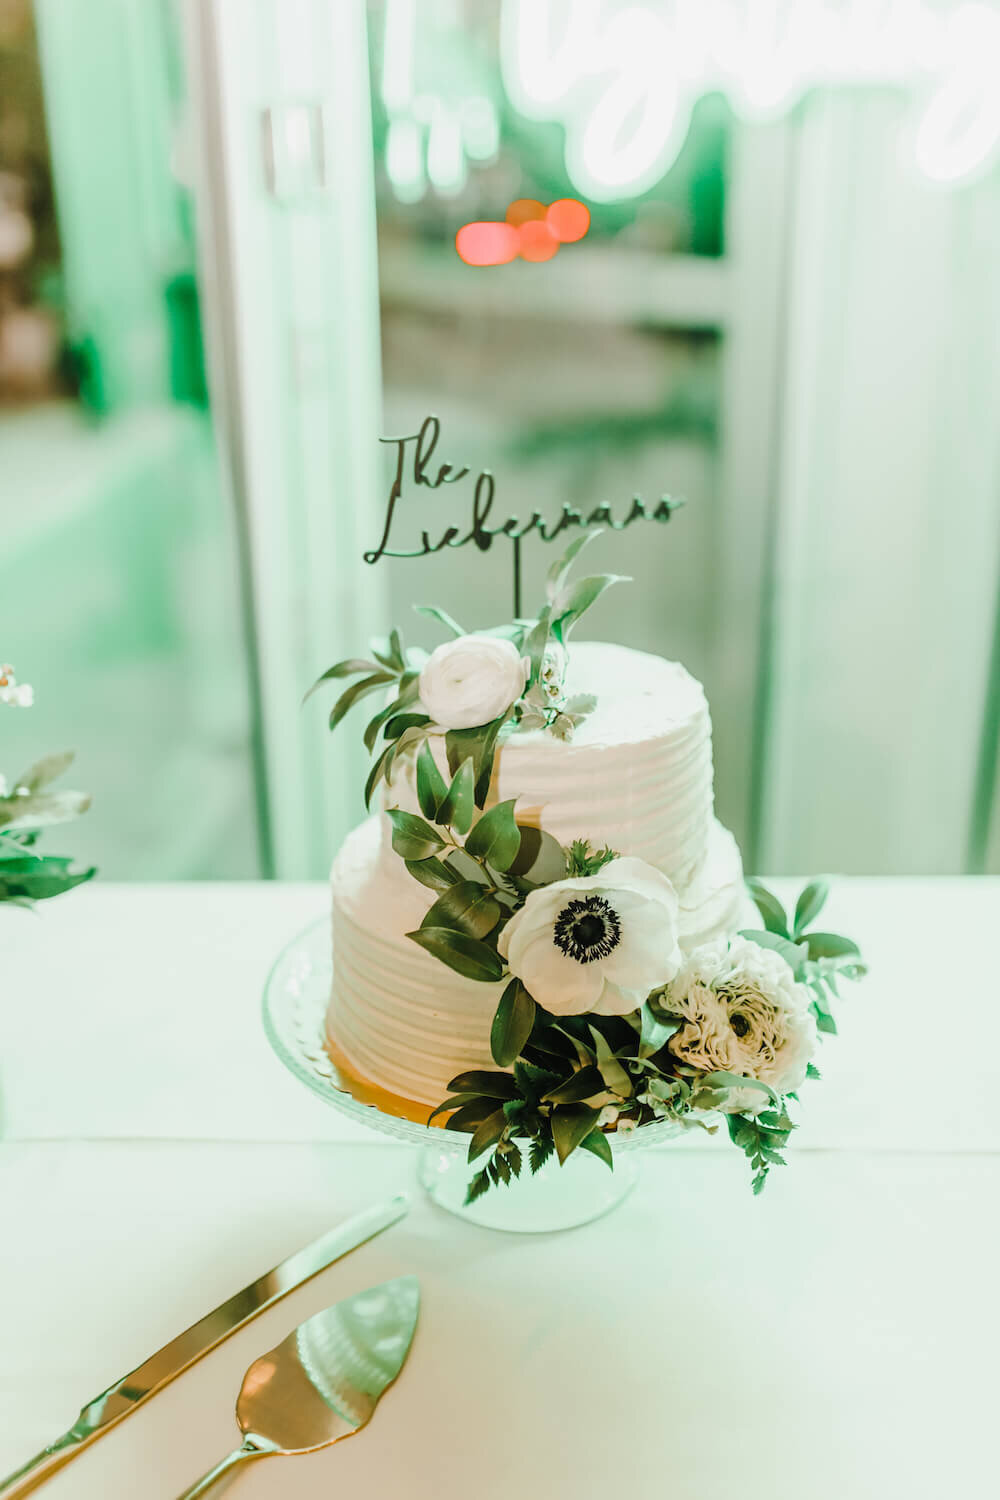 Jackie Lieberman Wedding - wedding cake